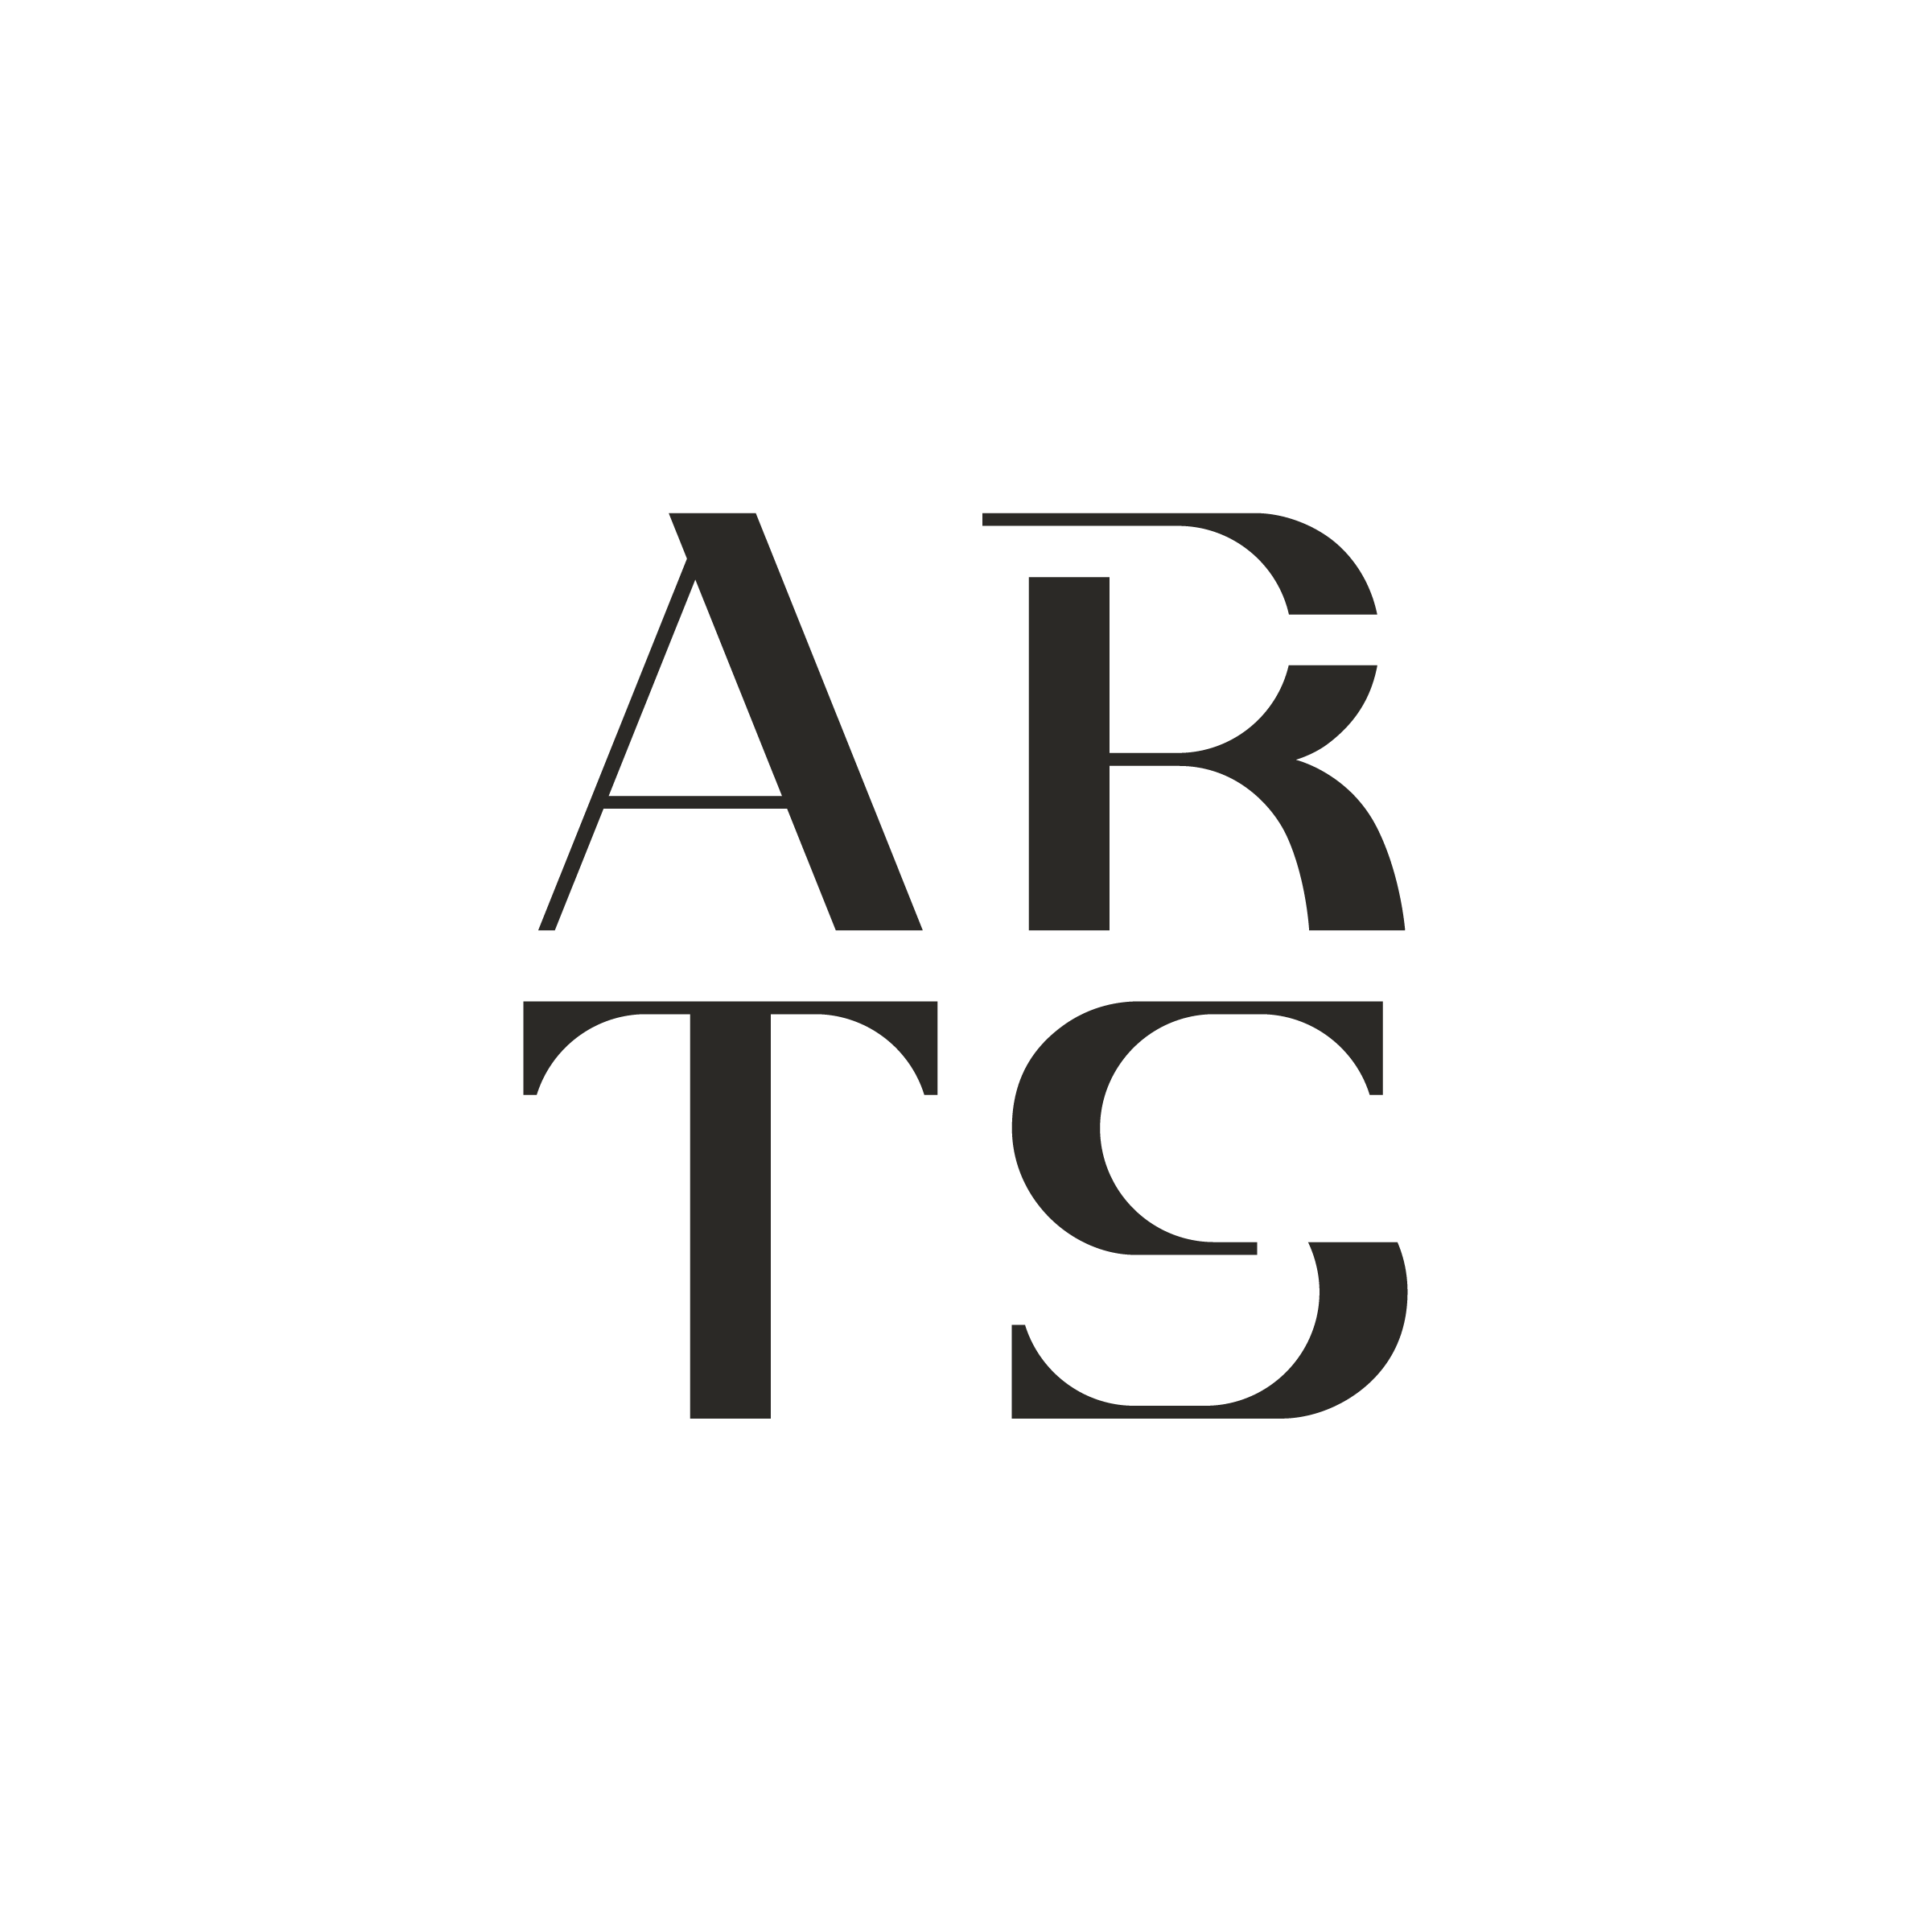 Arts KC logo.